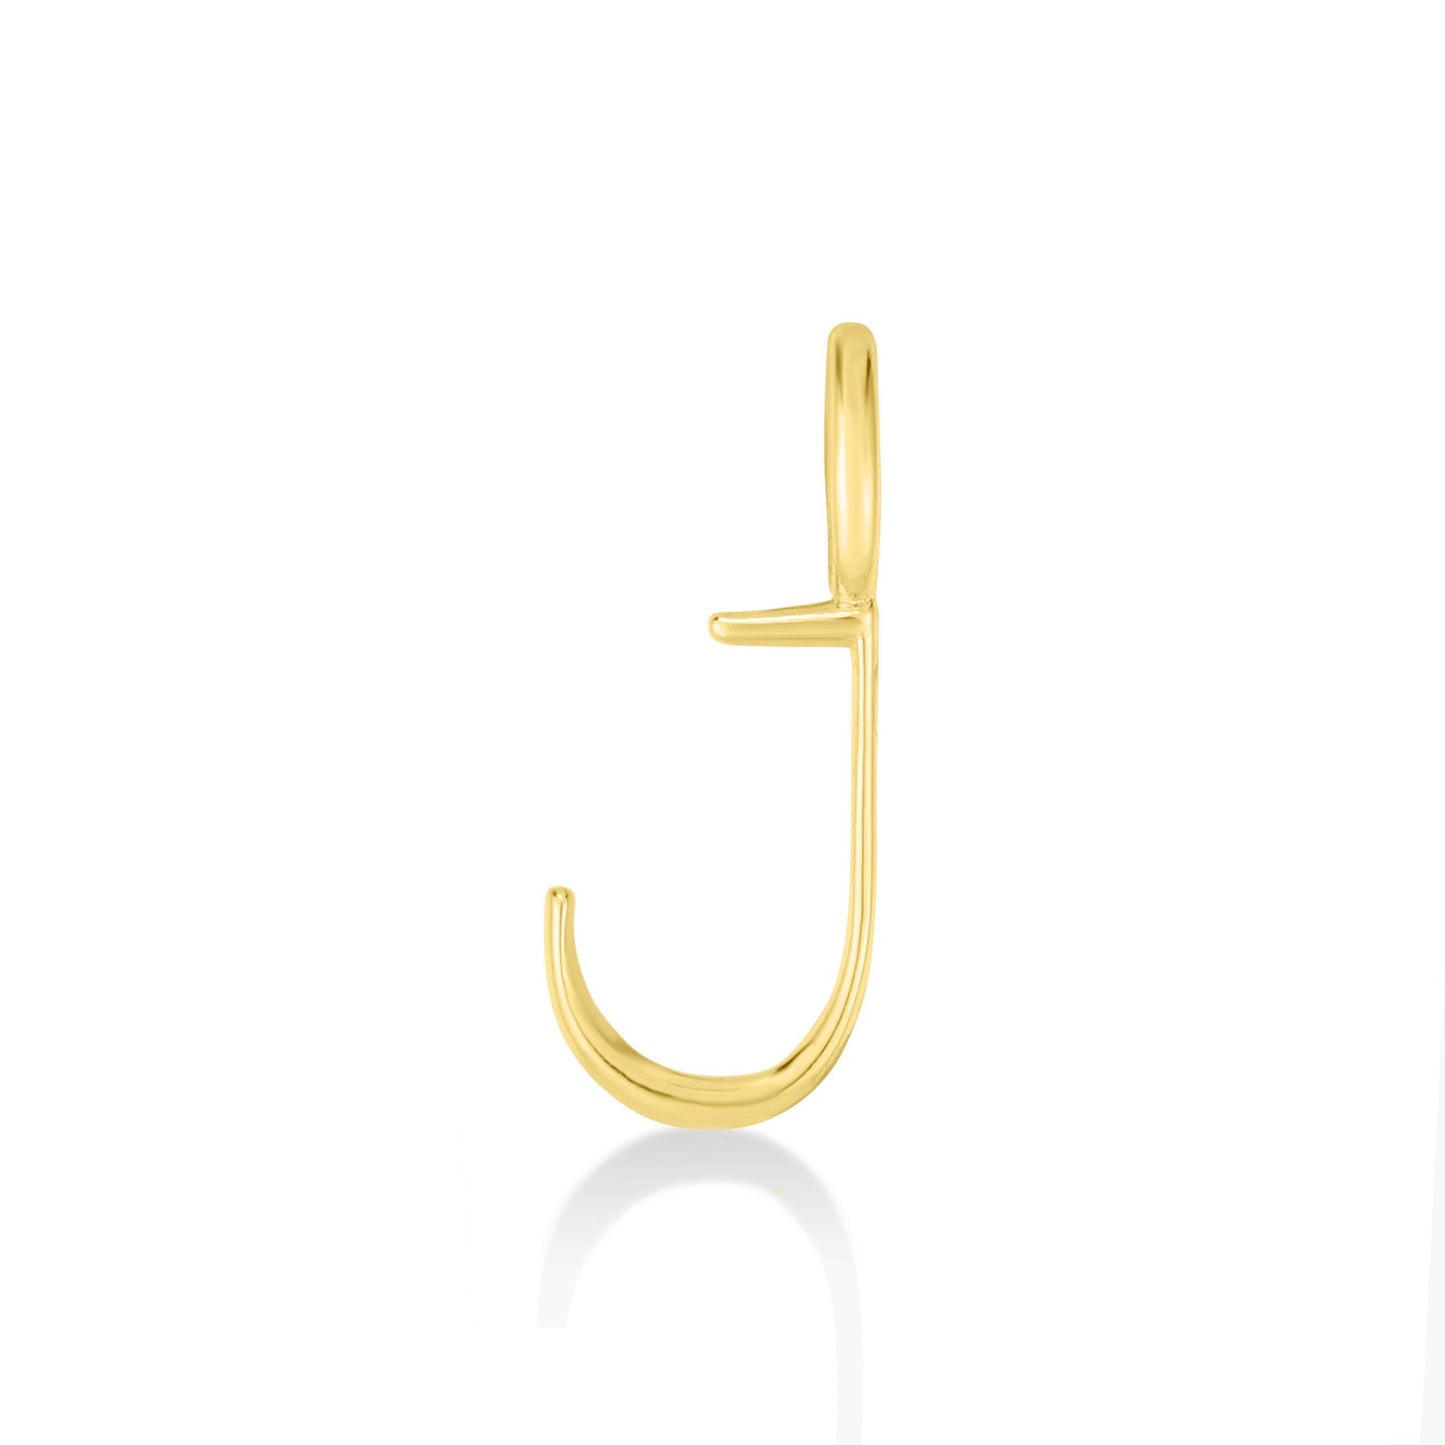 14K yellow gold J letter charm. 